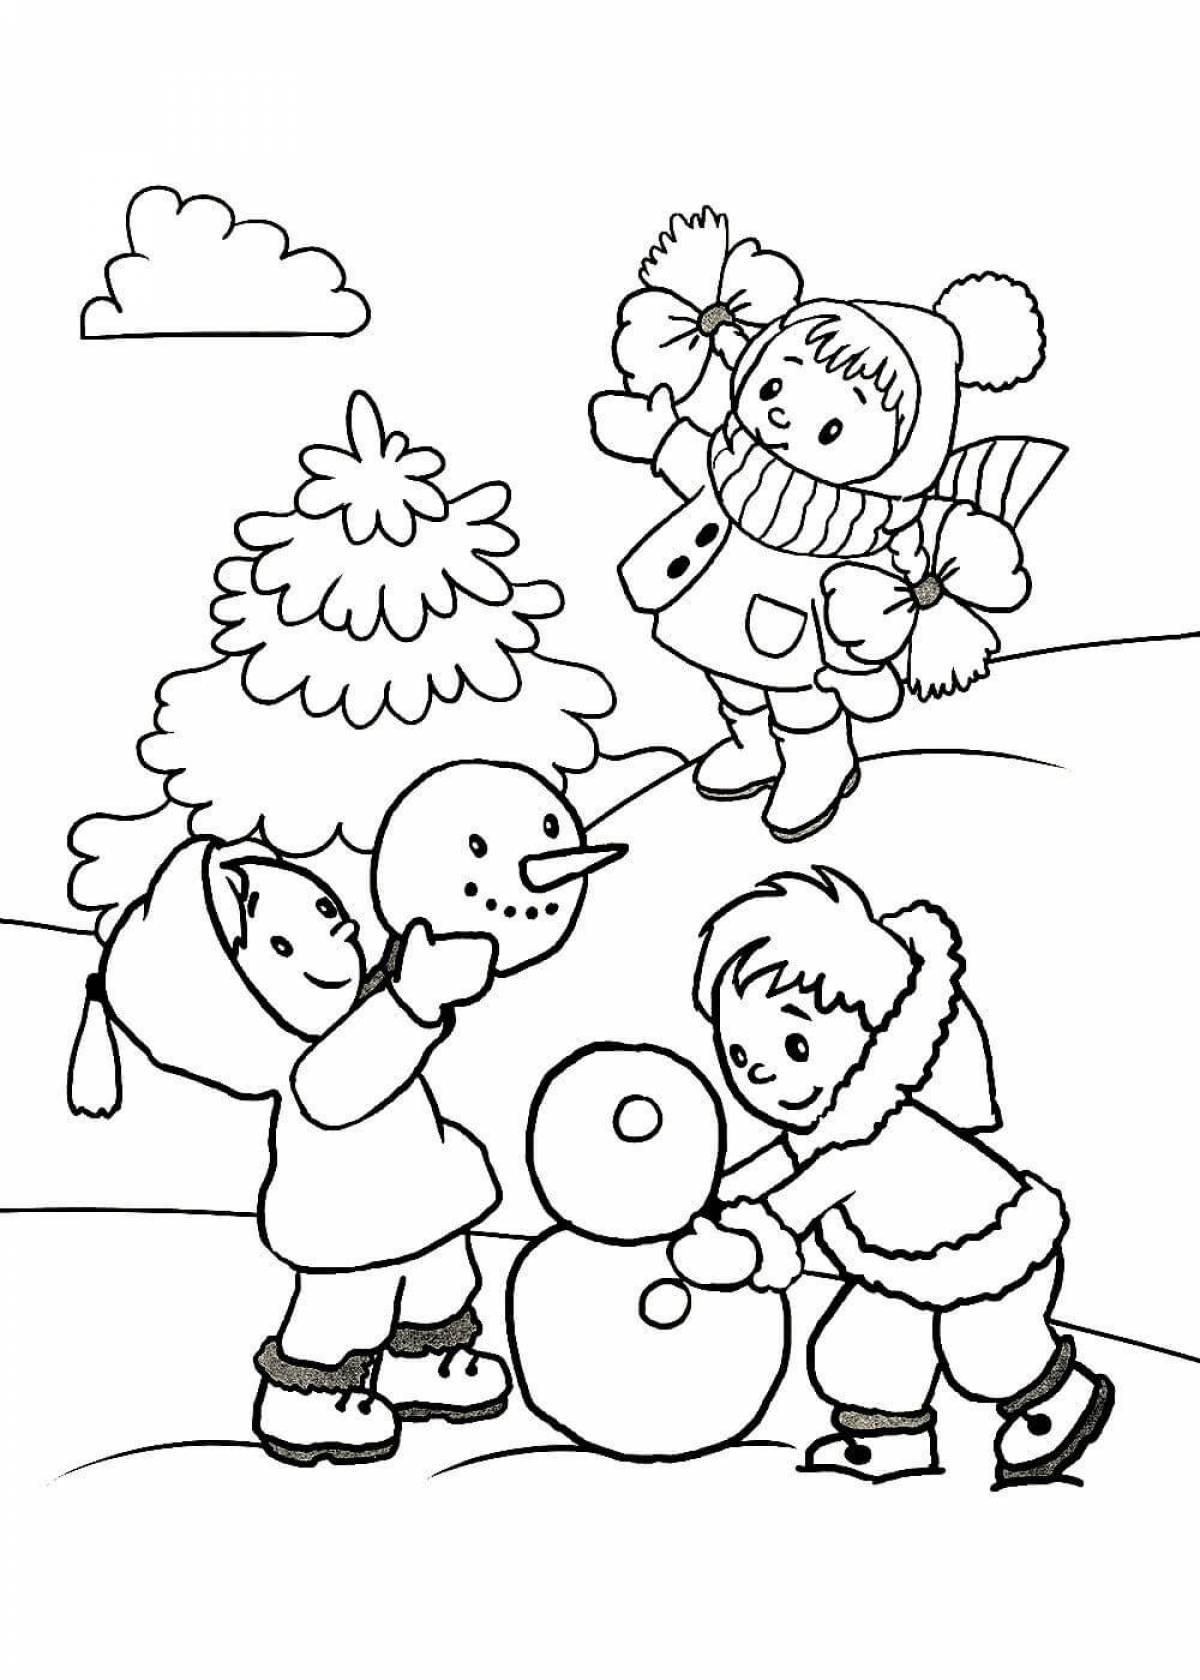 Joyfilled coloring page winter fun junior group